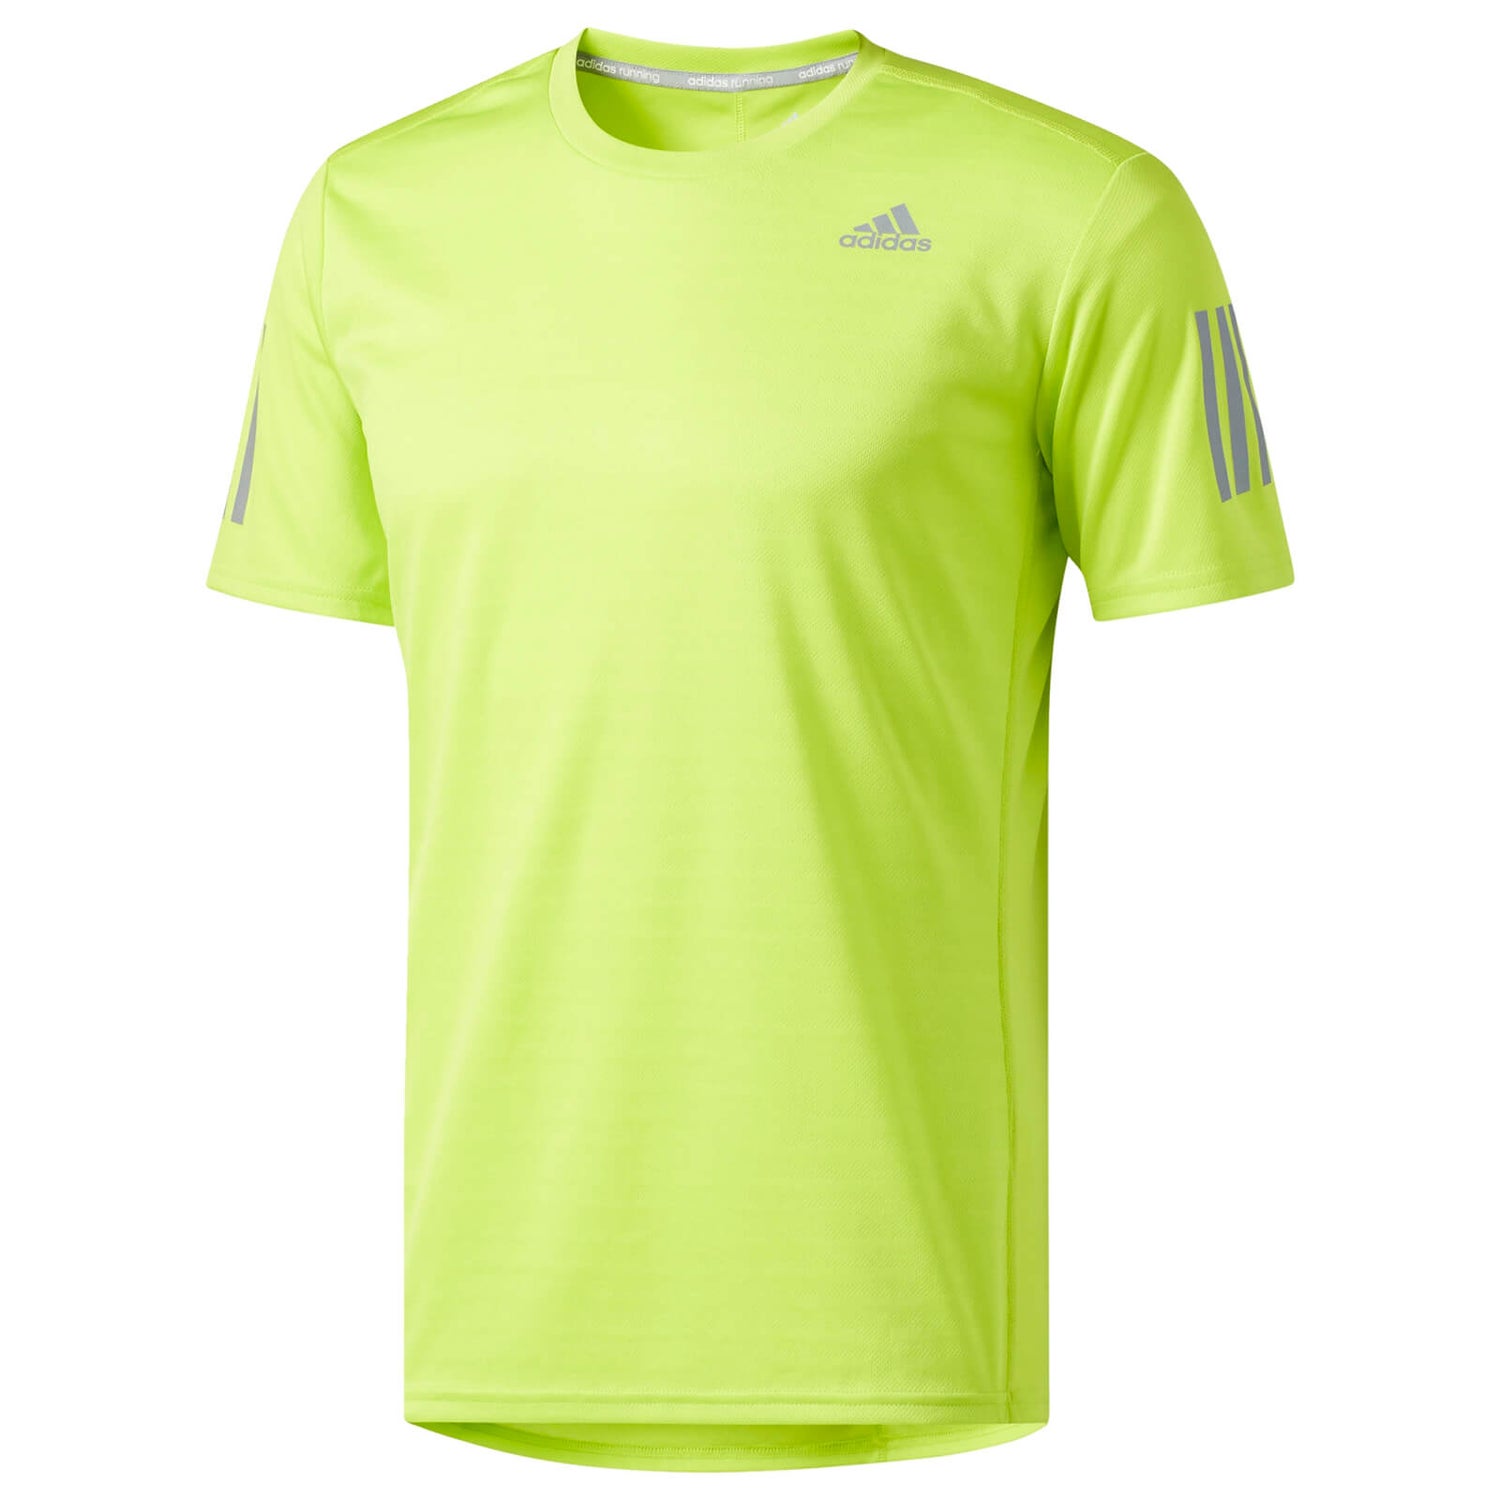 adidas Men's Supernova Running T-Shirt - Yellow | TheHut.com